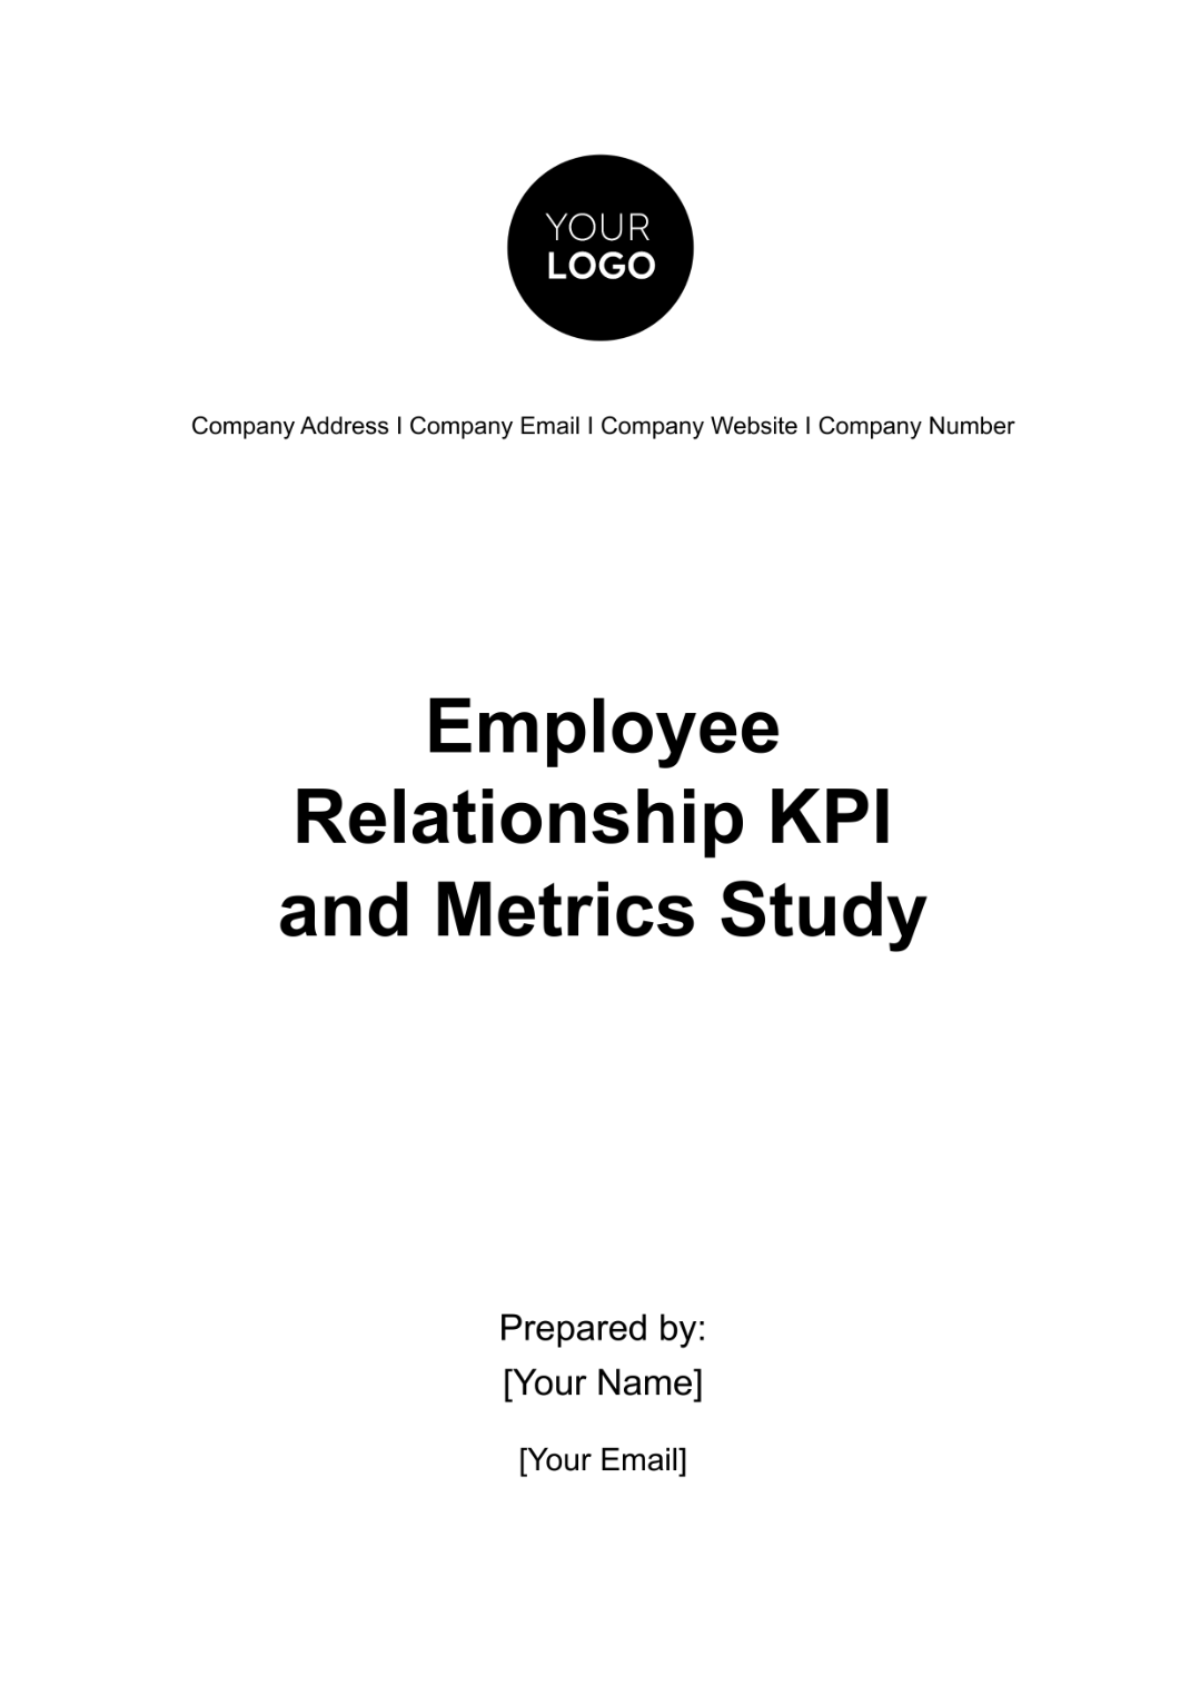 Free Employee Relationship KPI and Metrics Study HR Template